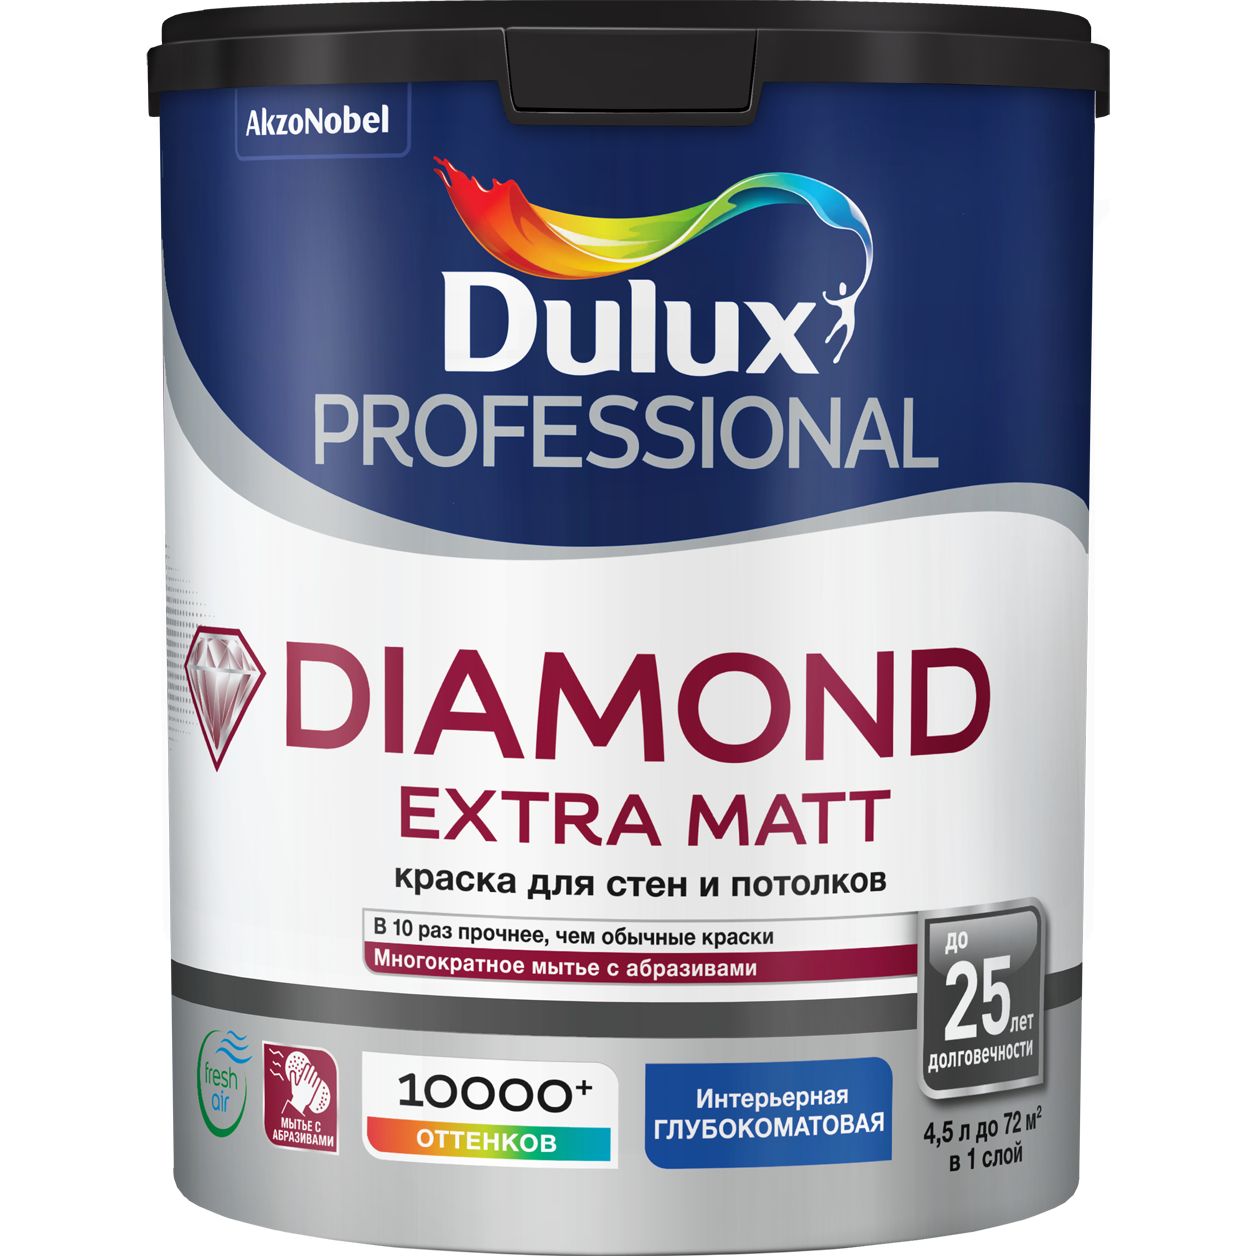 Dulux professional Diamond Extra Matt